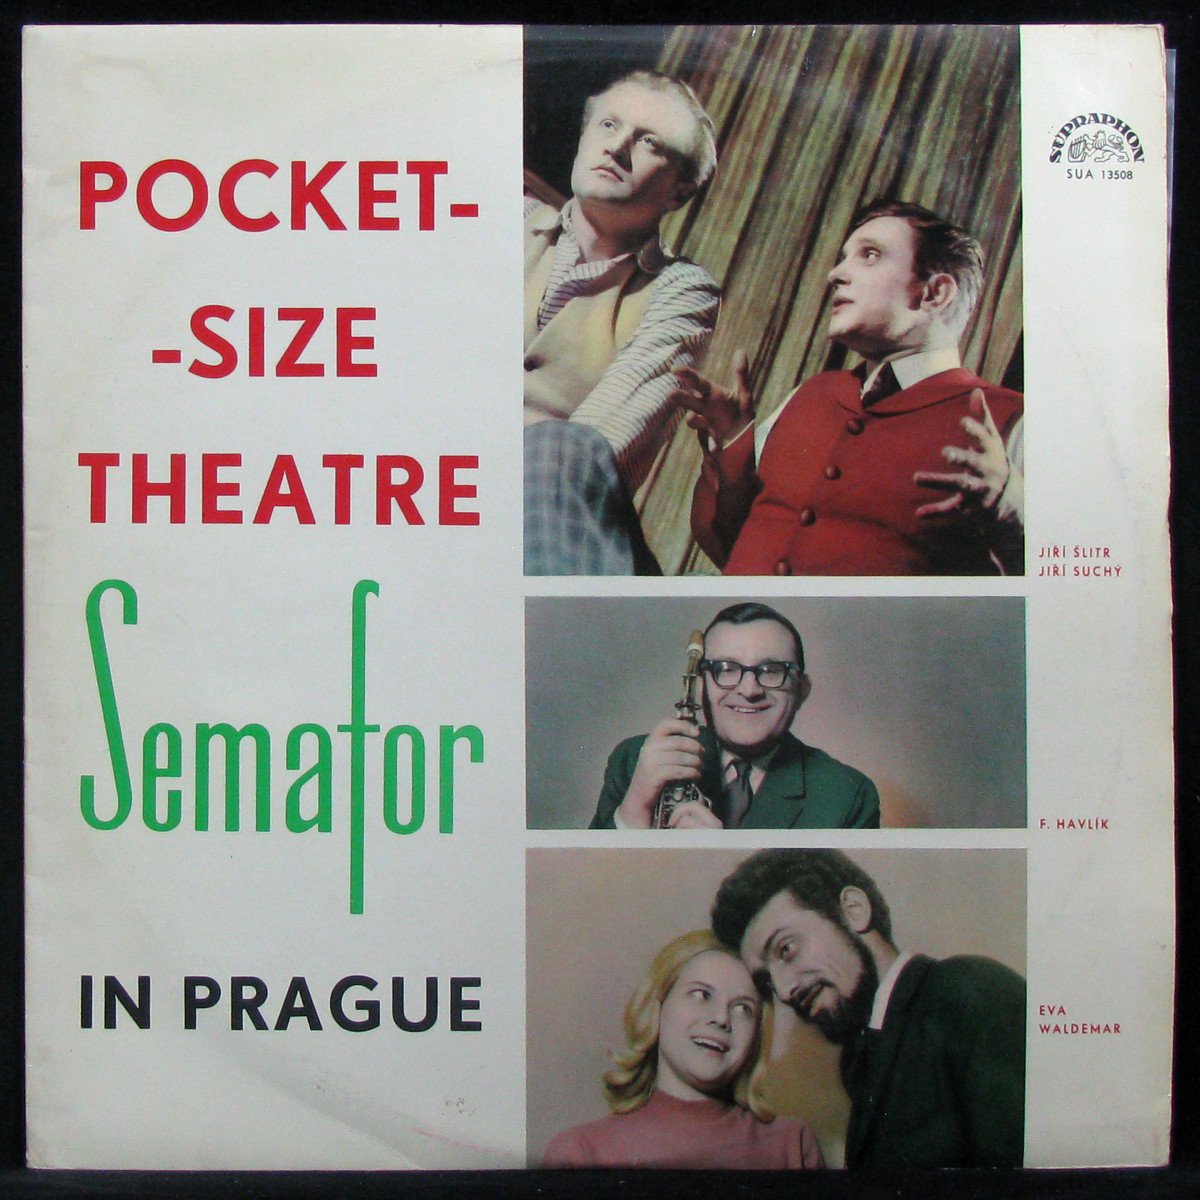 Pocket-Size Theatre Semafor In Prague